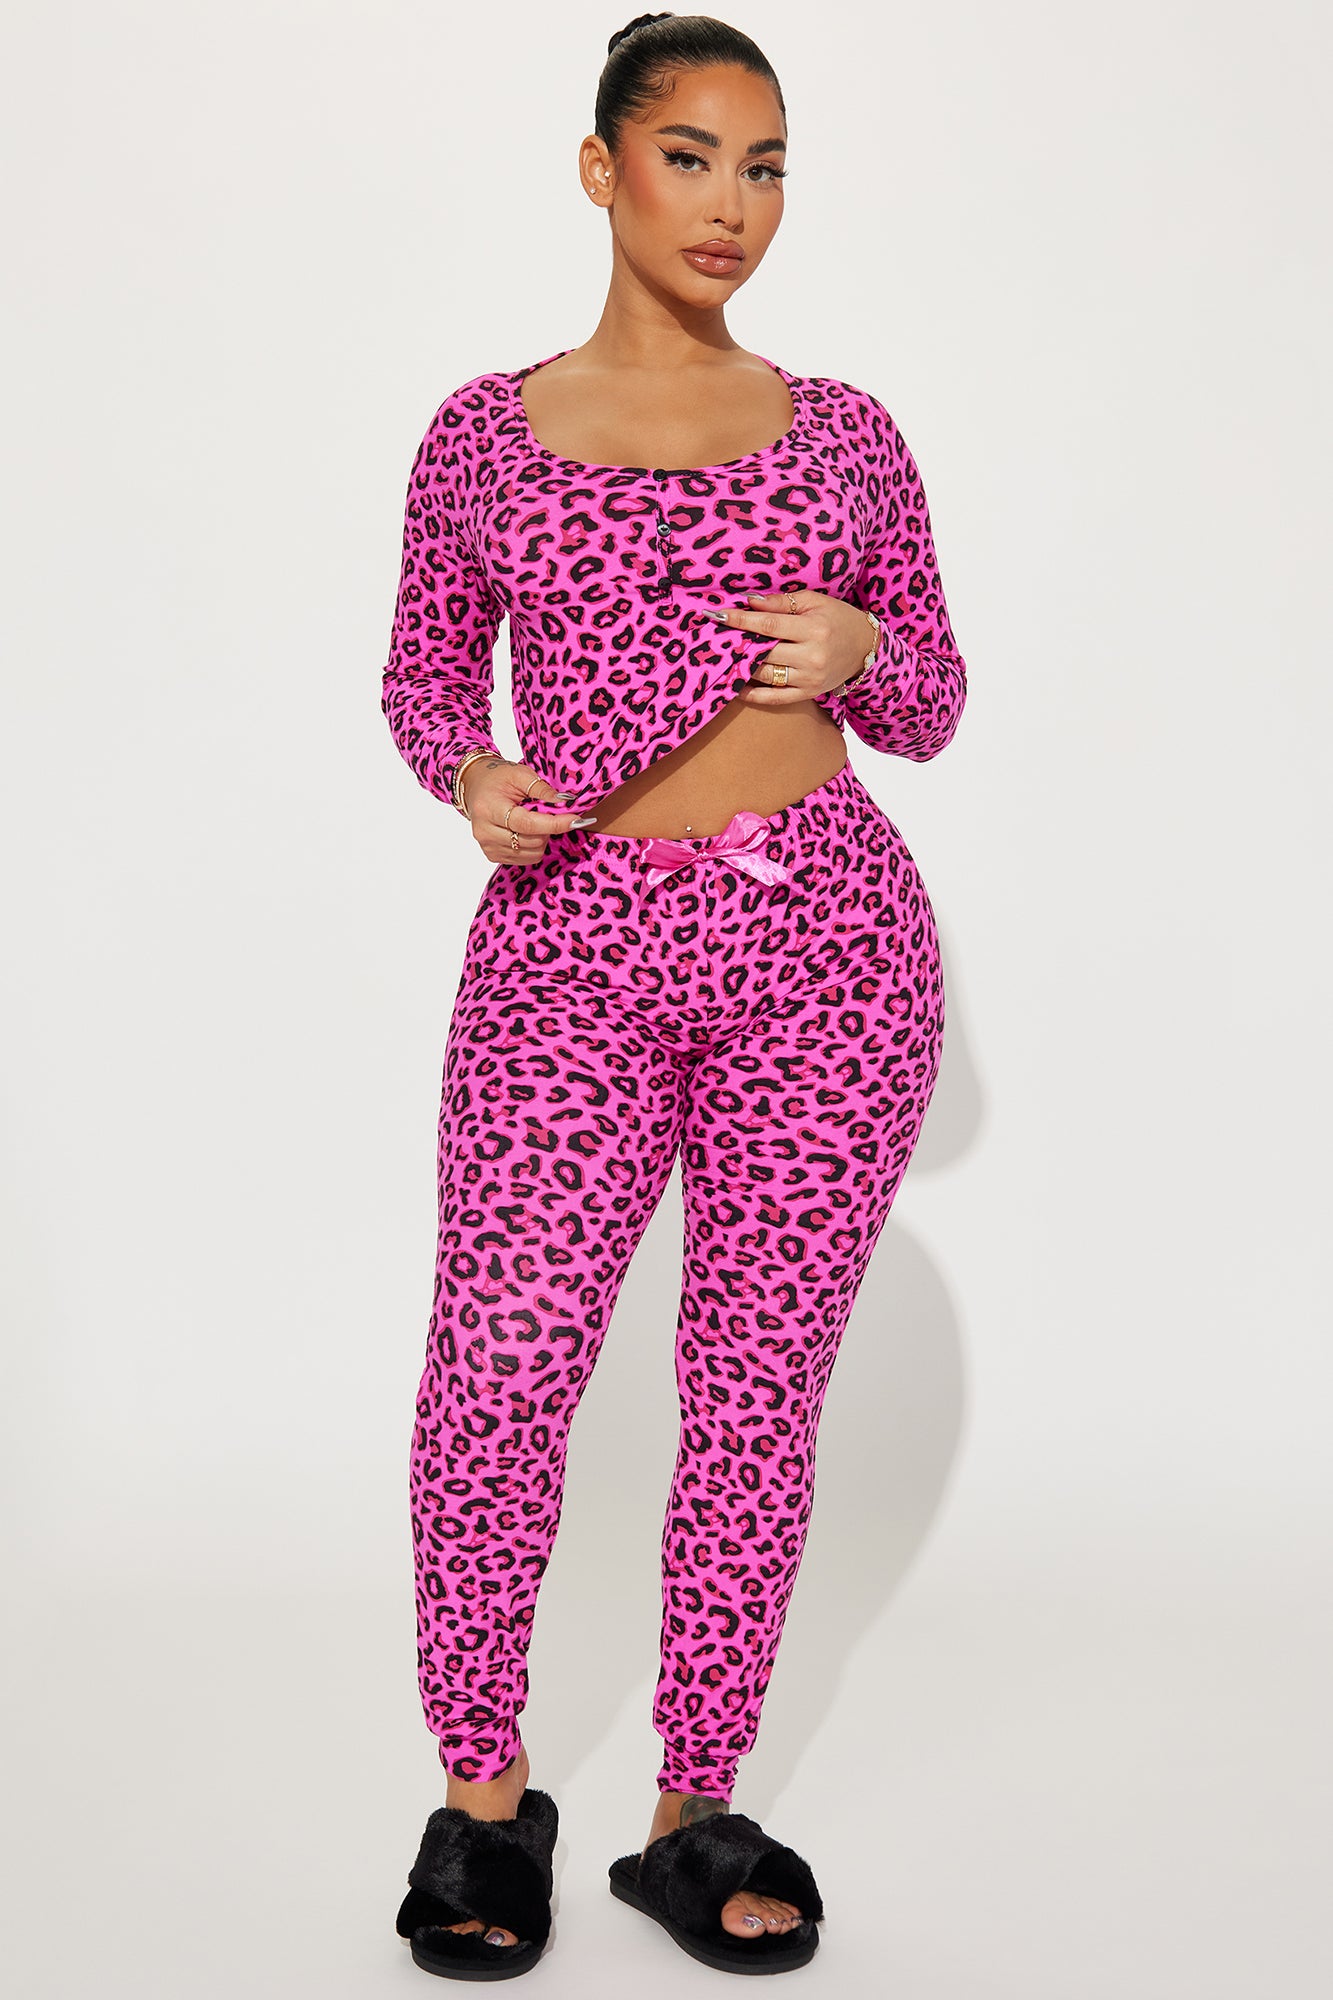 Hot Pink Leopard PJ Pants